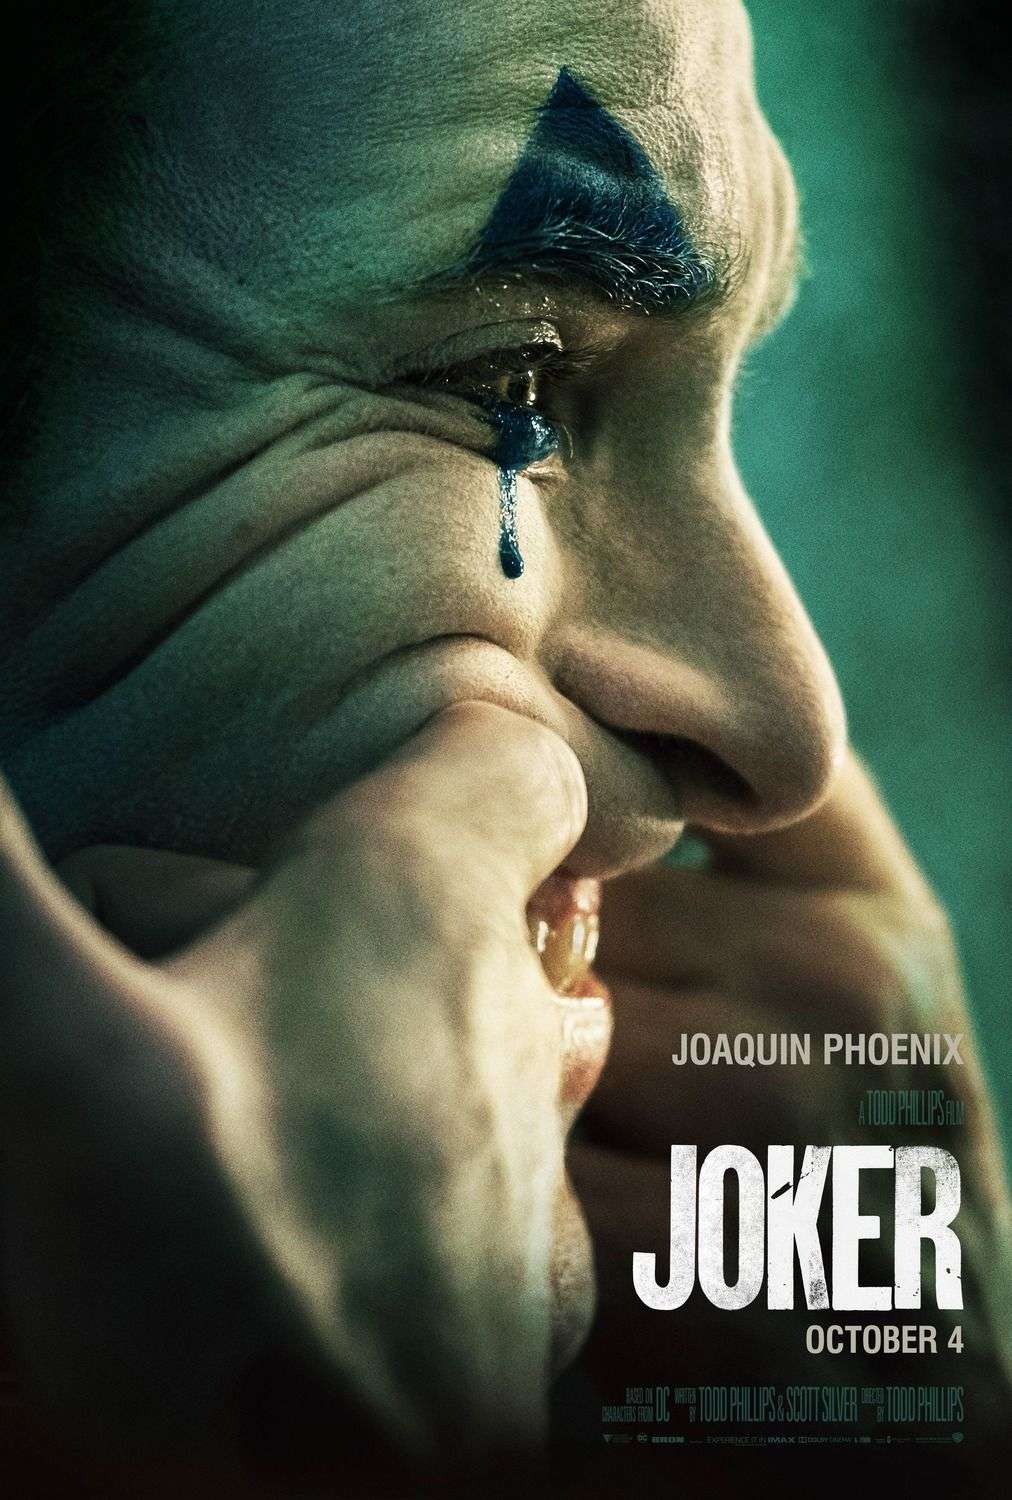 Joker-Film 2019 Joaquin Phoenix